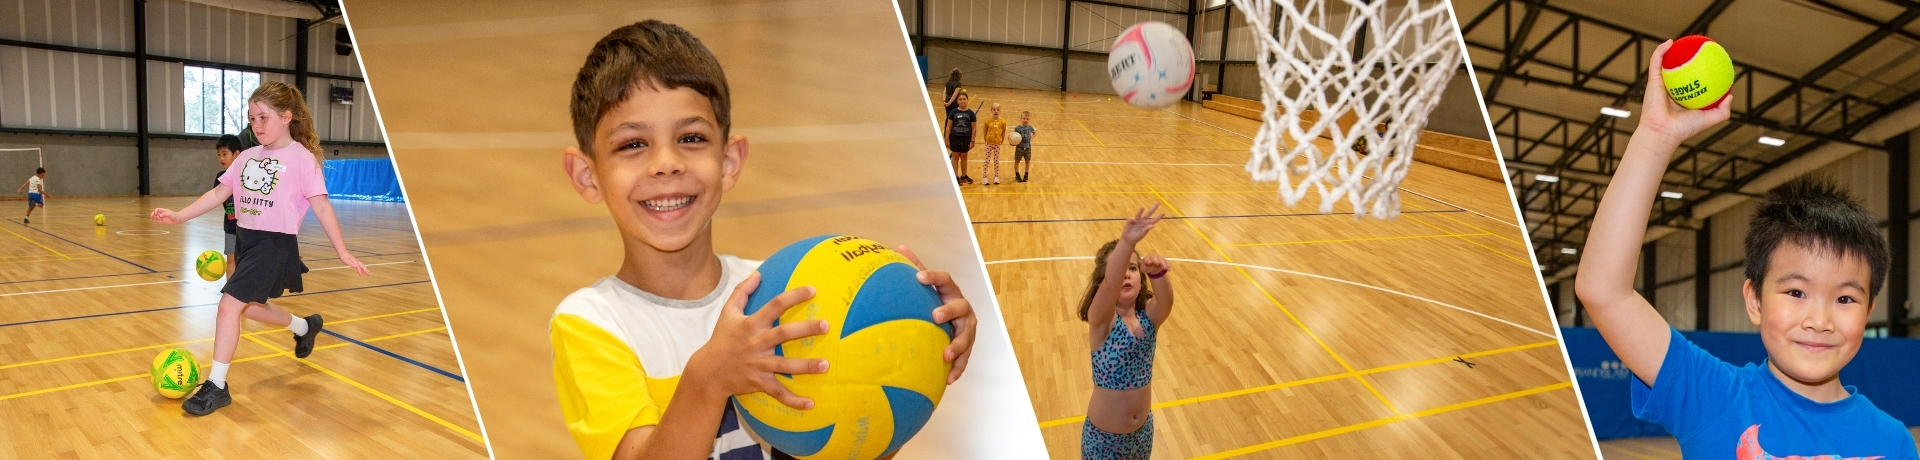 Children enjoying futsal, volleyball, netball, and tennis